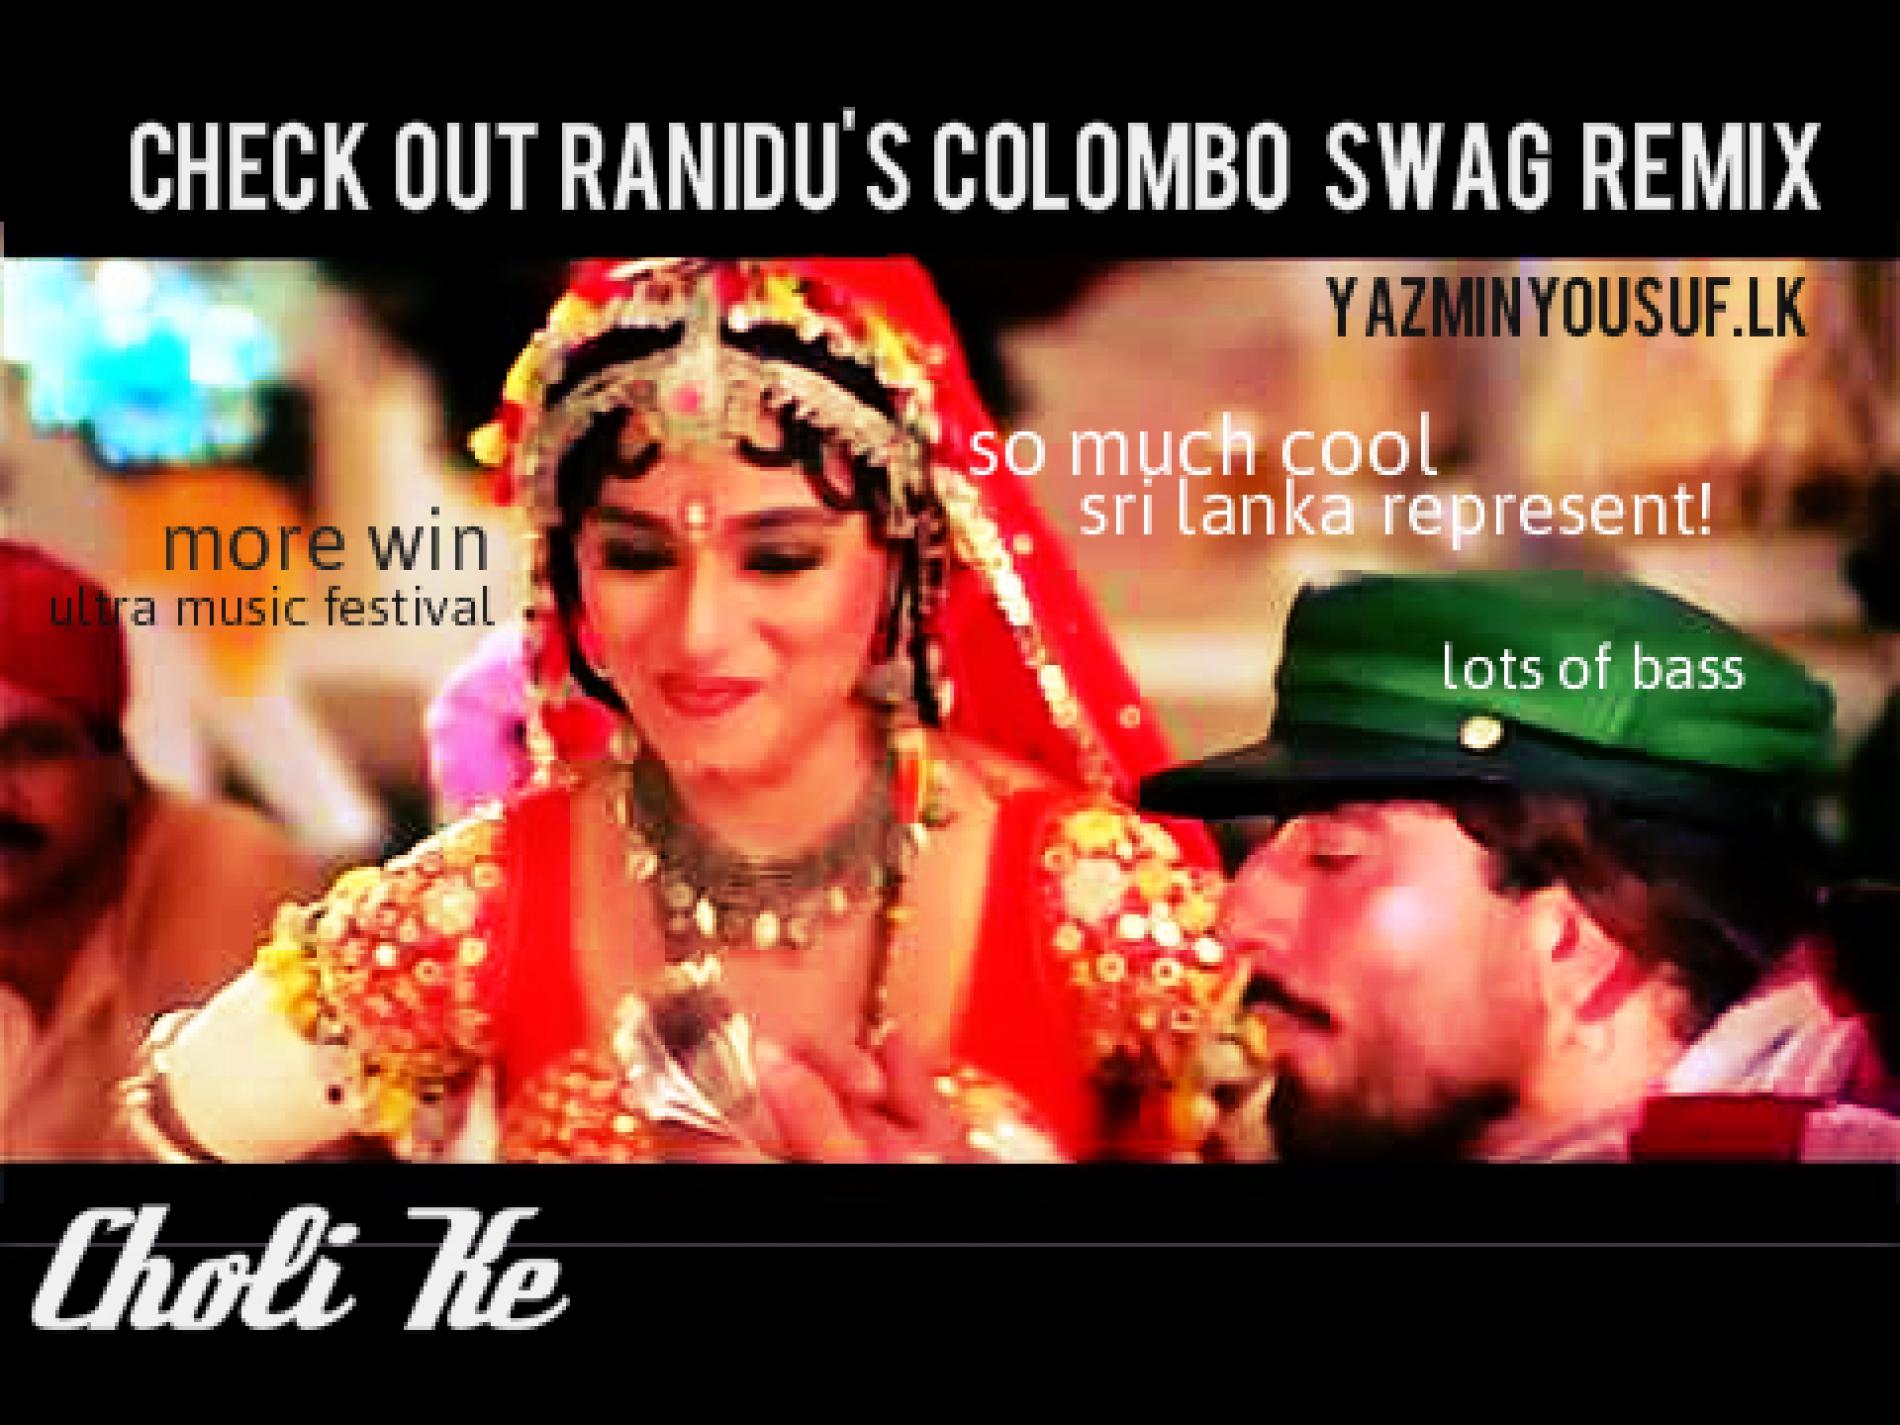 Ranidu- Choli ke (Ranidu’s Colombo Swag remix)